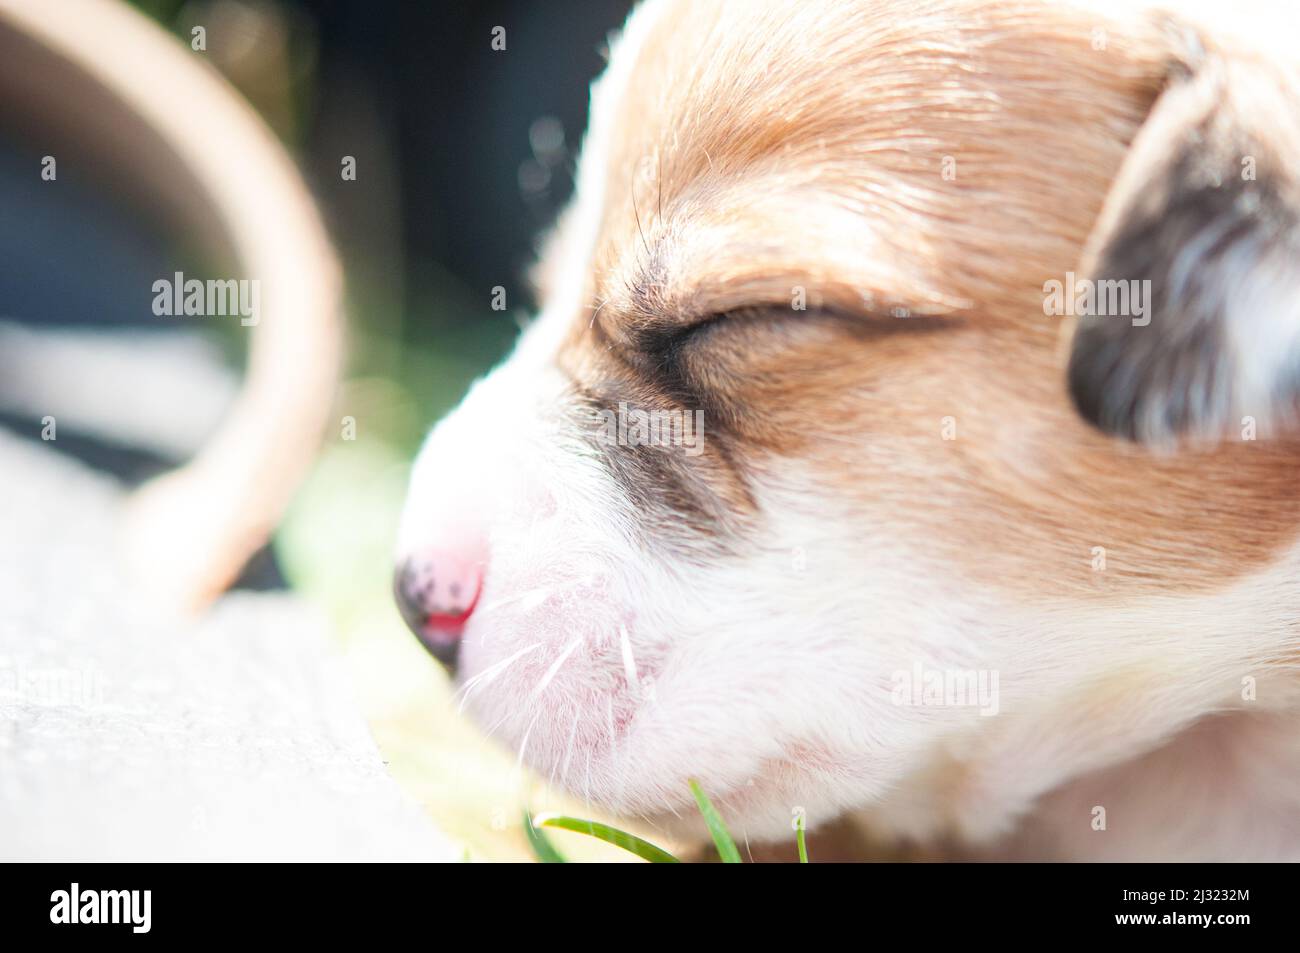 Close up puppy portrait Stock Photo